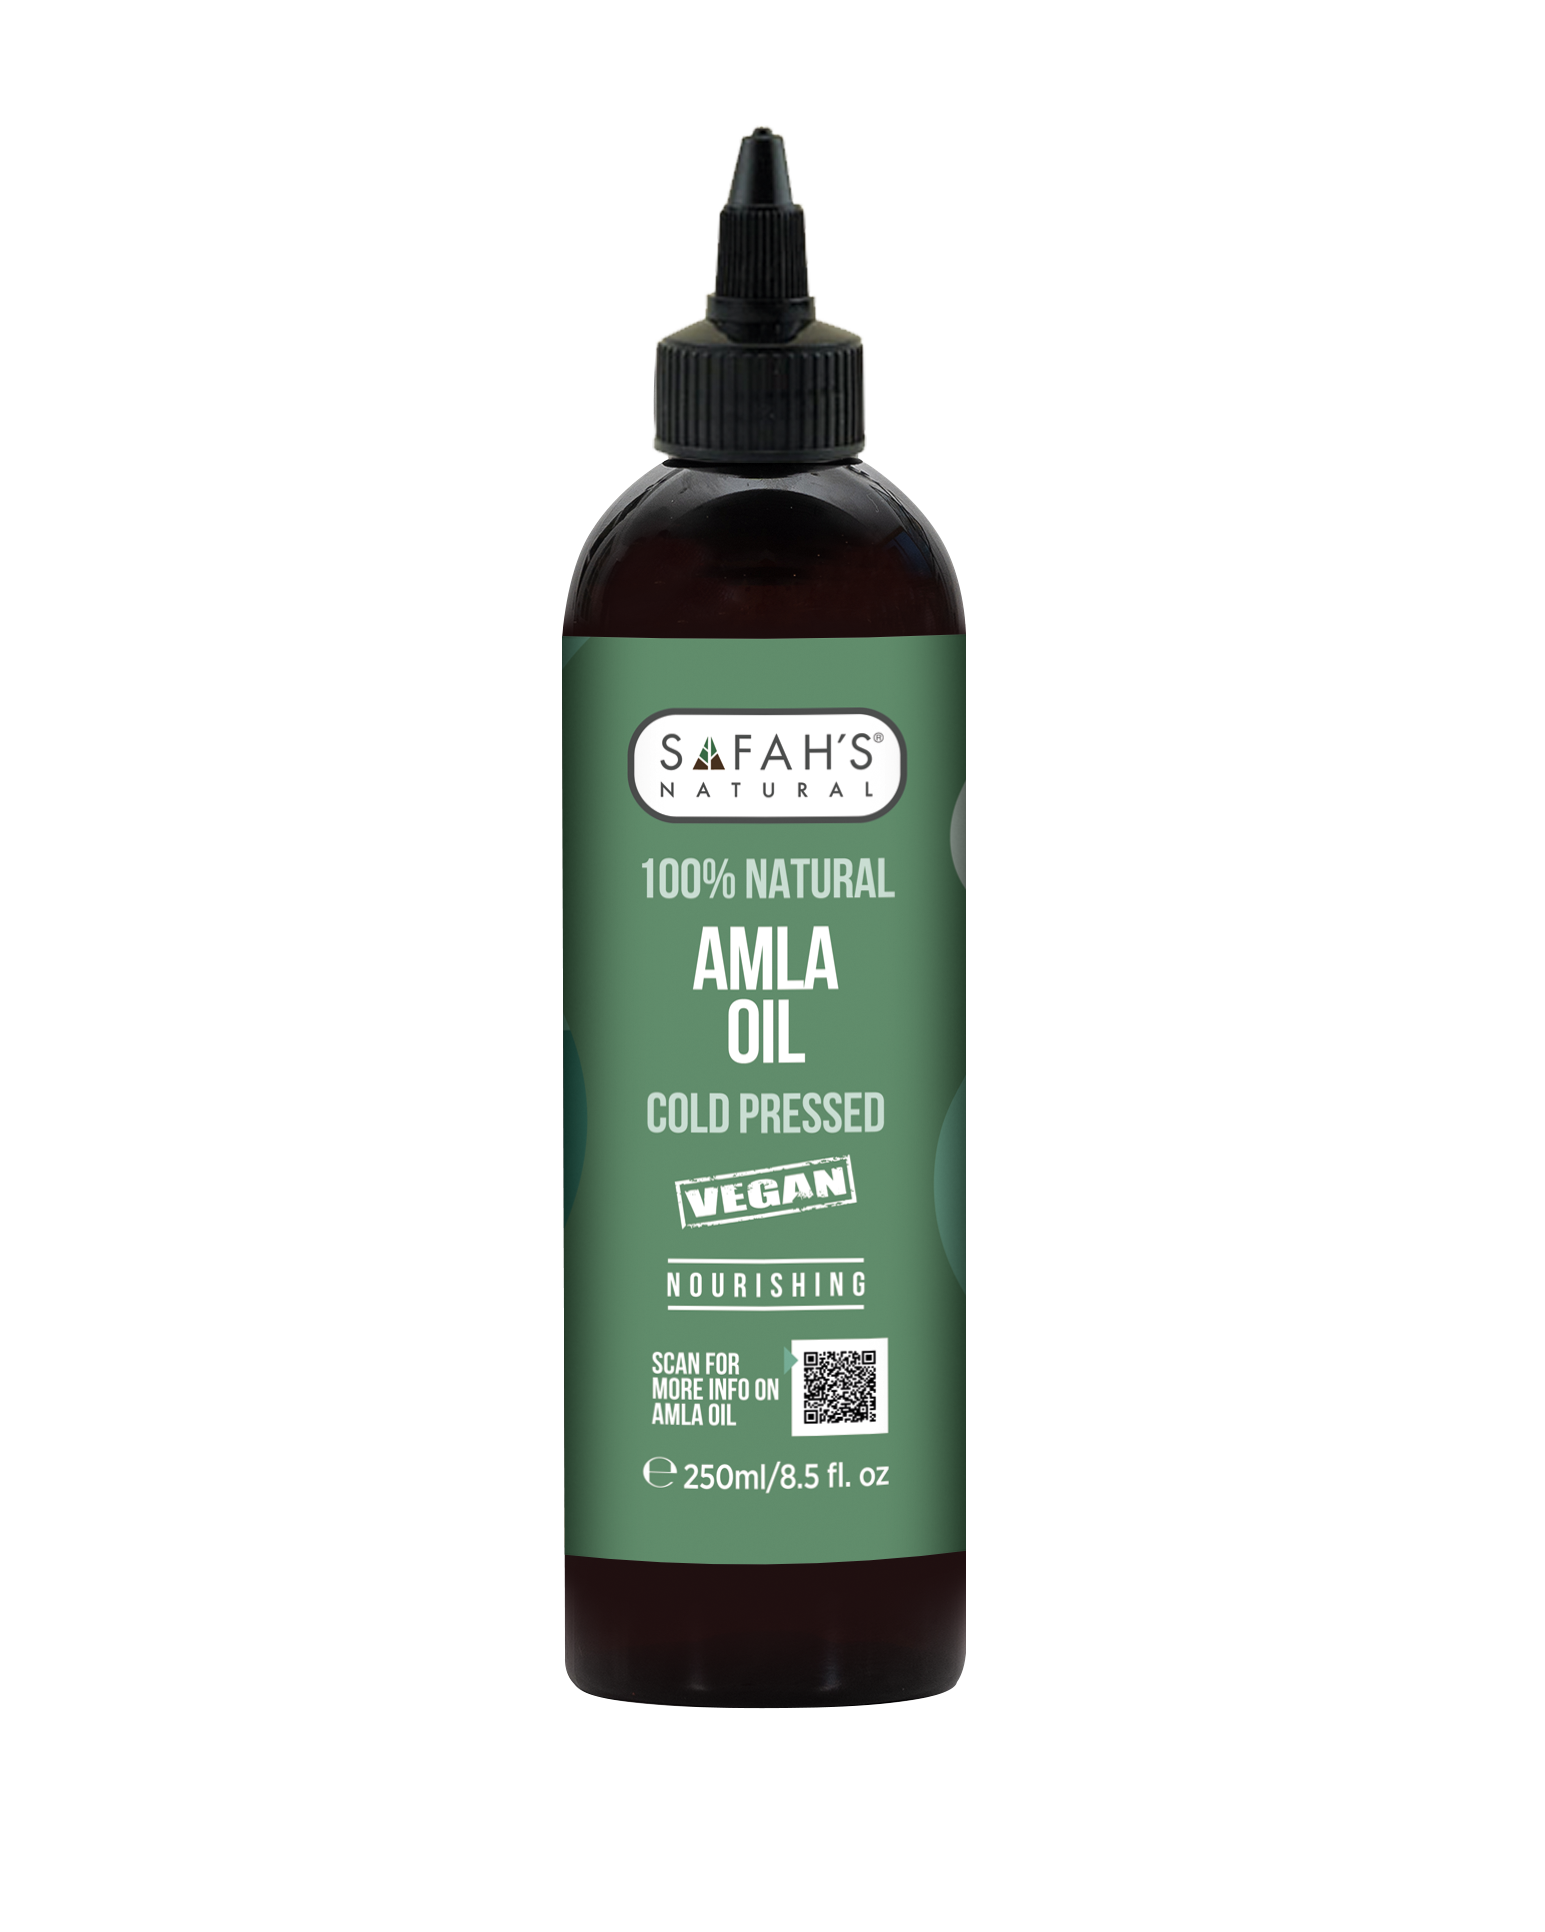 Amla oil 100% Natural - for Vibrant Growth & Shine